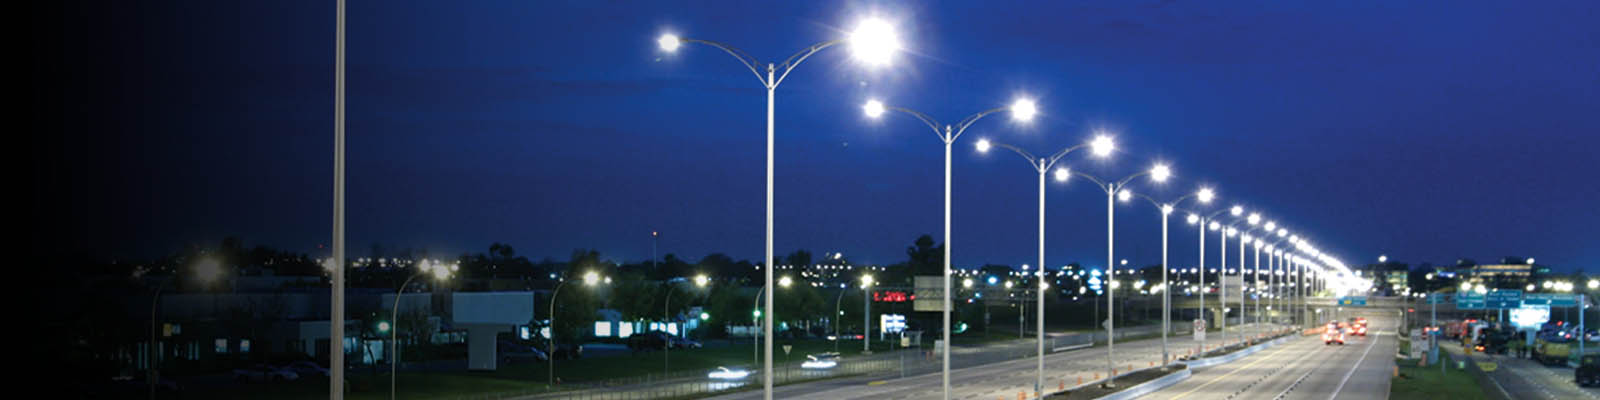 Roadway with street lighting